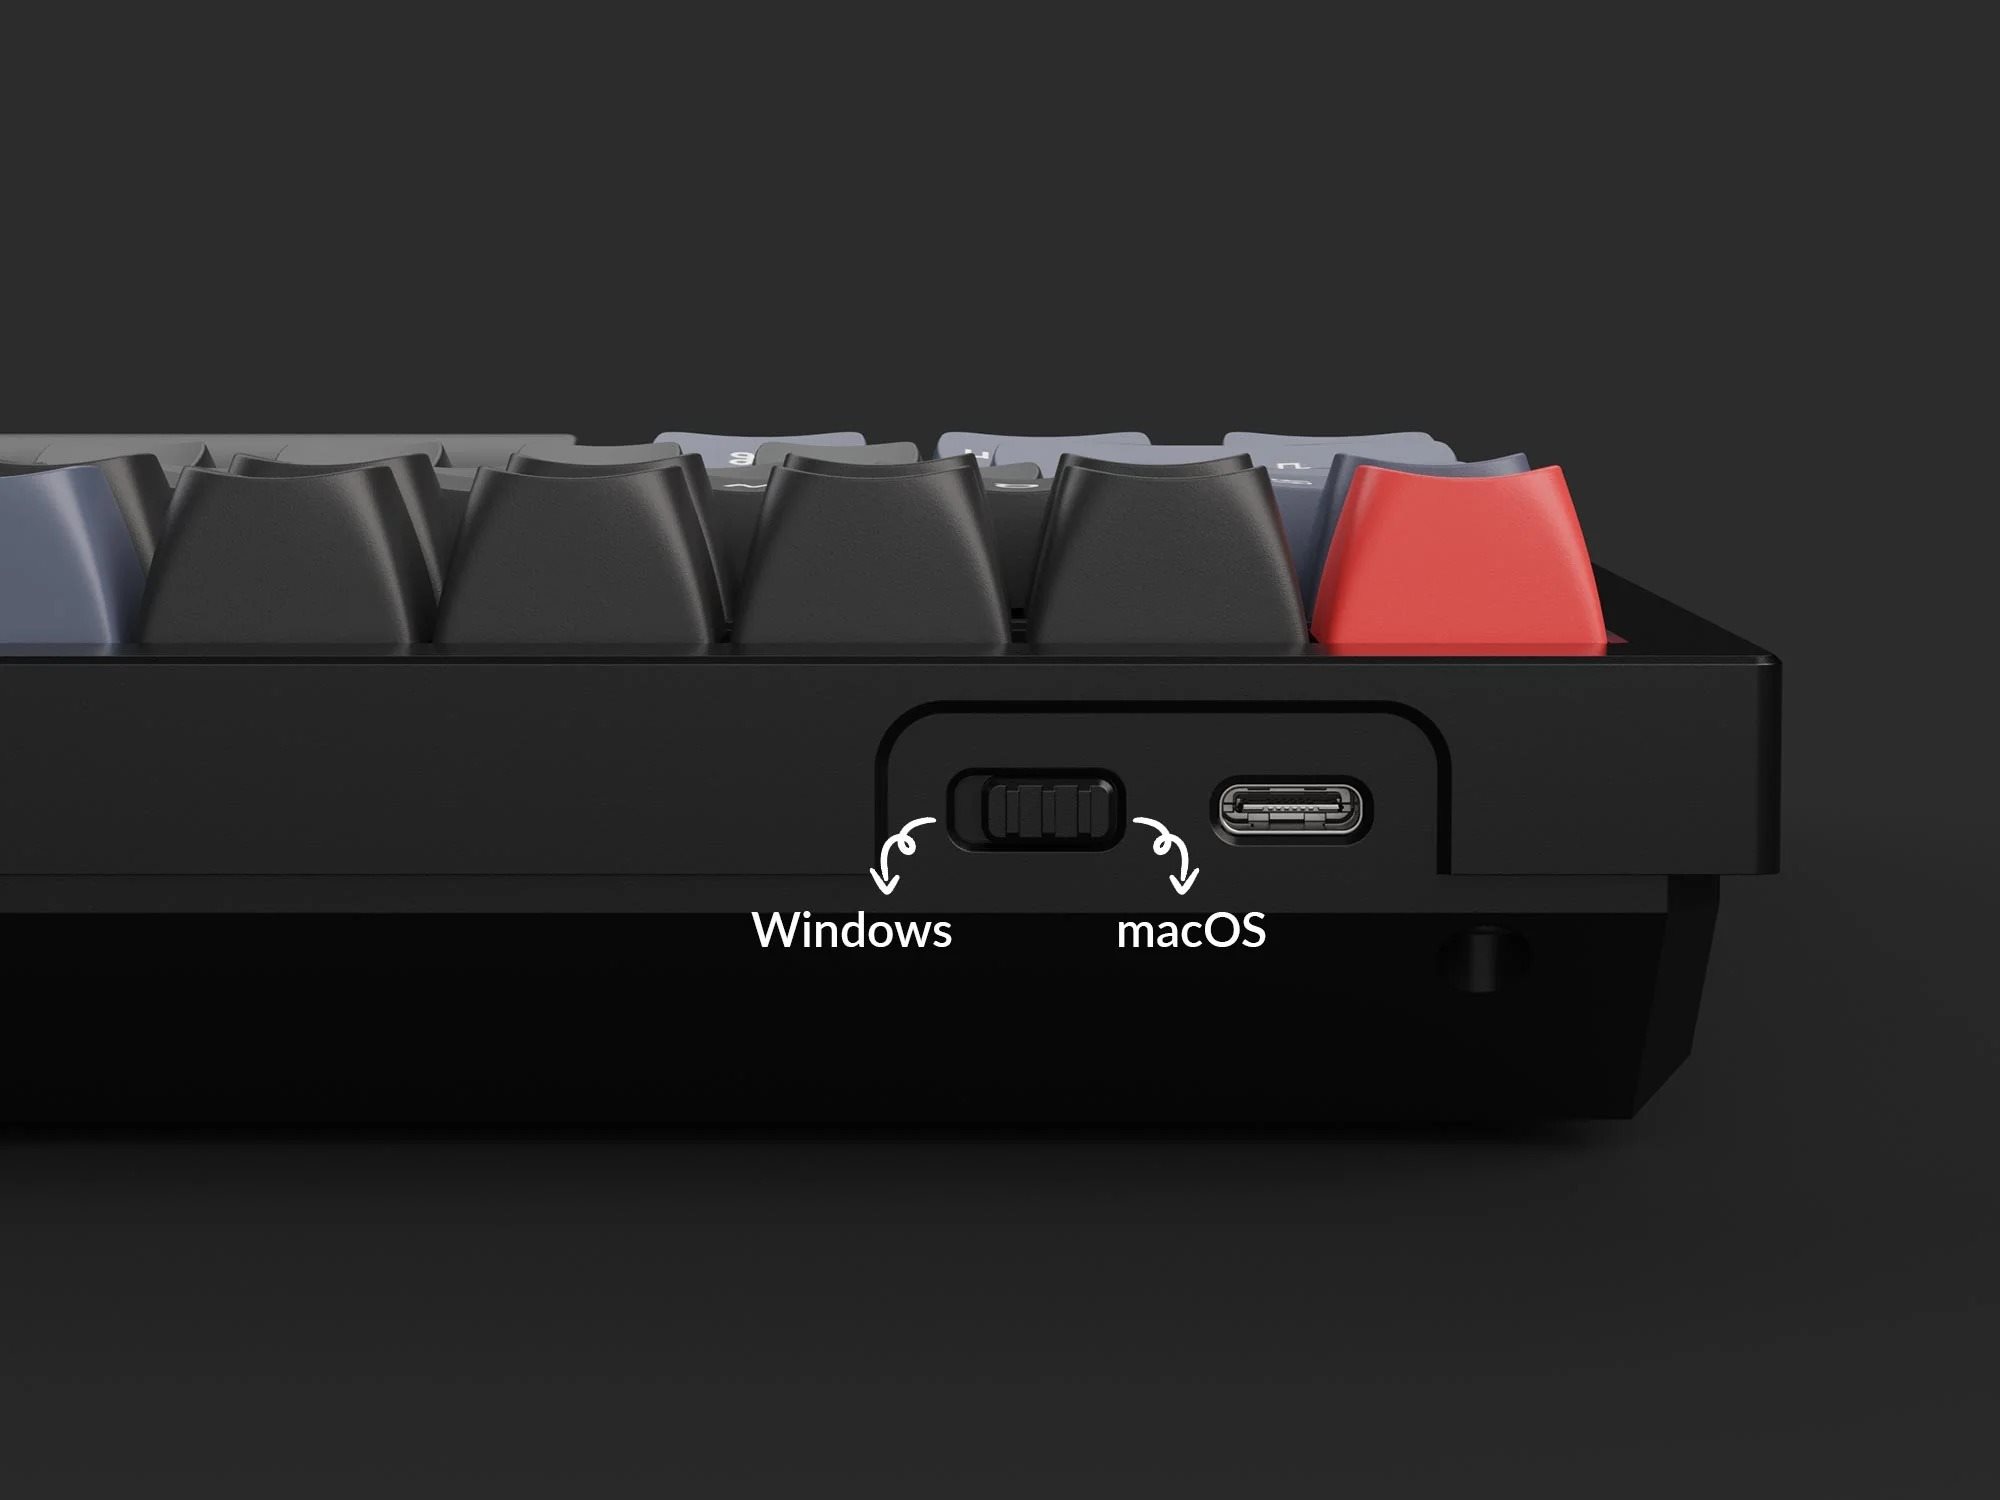 Gaming-Tastatur Keychron Q5 Swappable RGB Backlight Brown Switch - Black ...